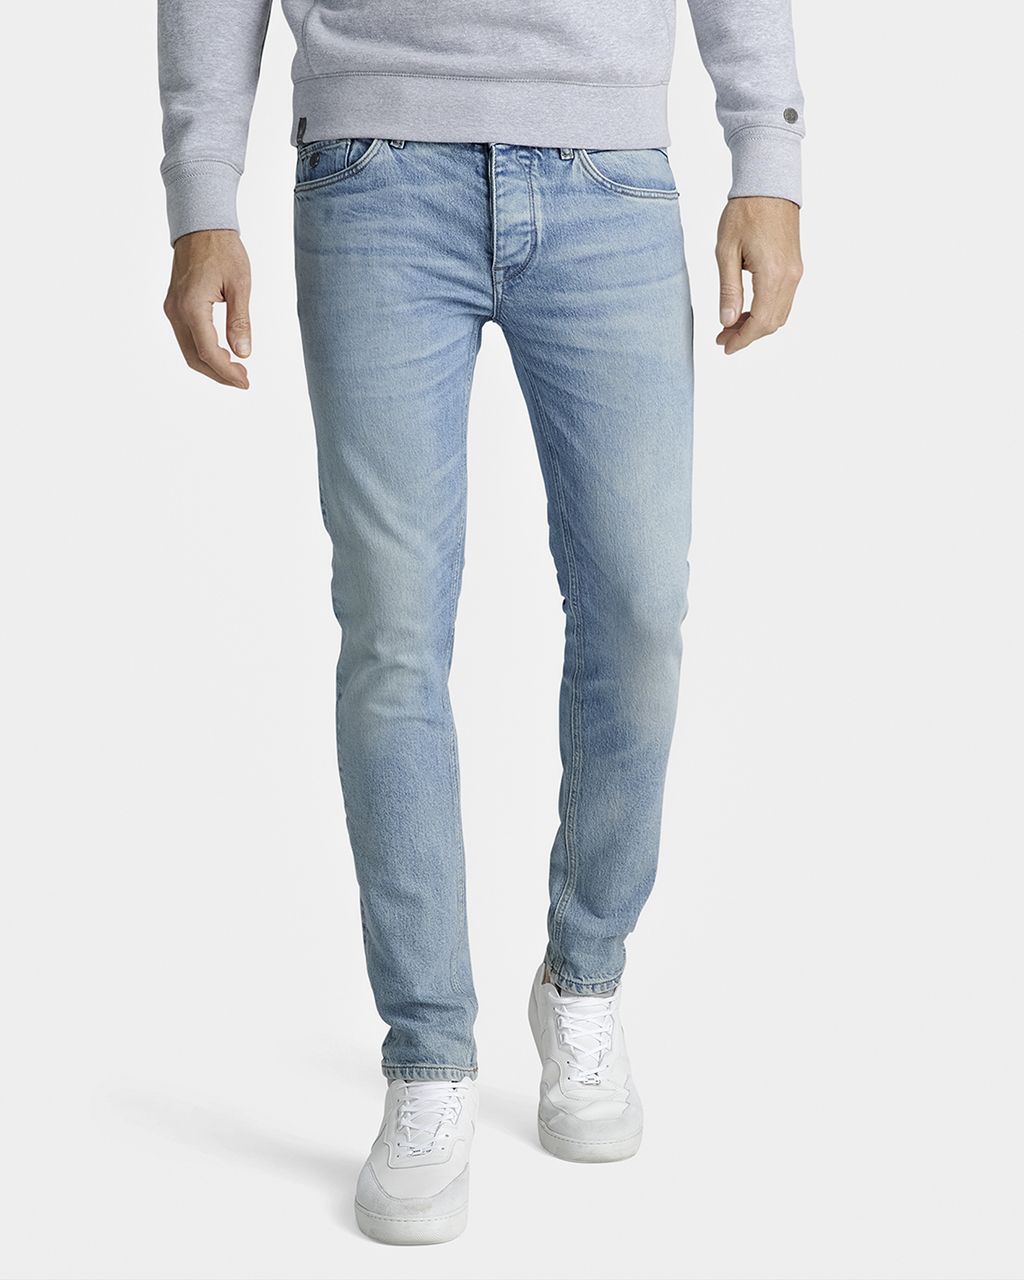 Cast Iron Riser Slim Fit Jeans | Shop nu - Only for Men